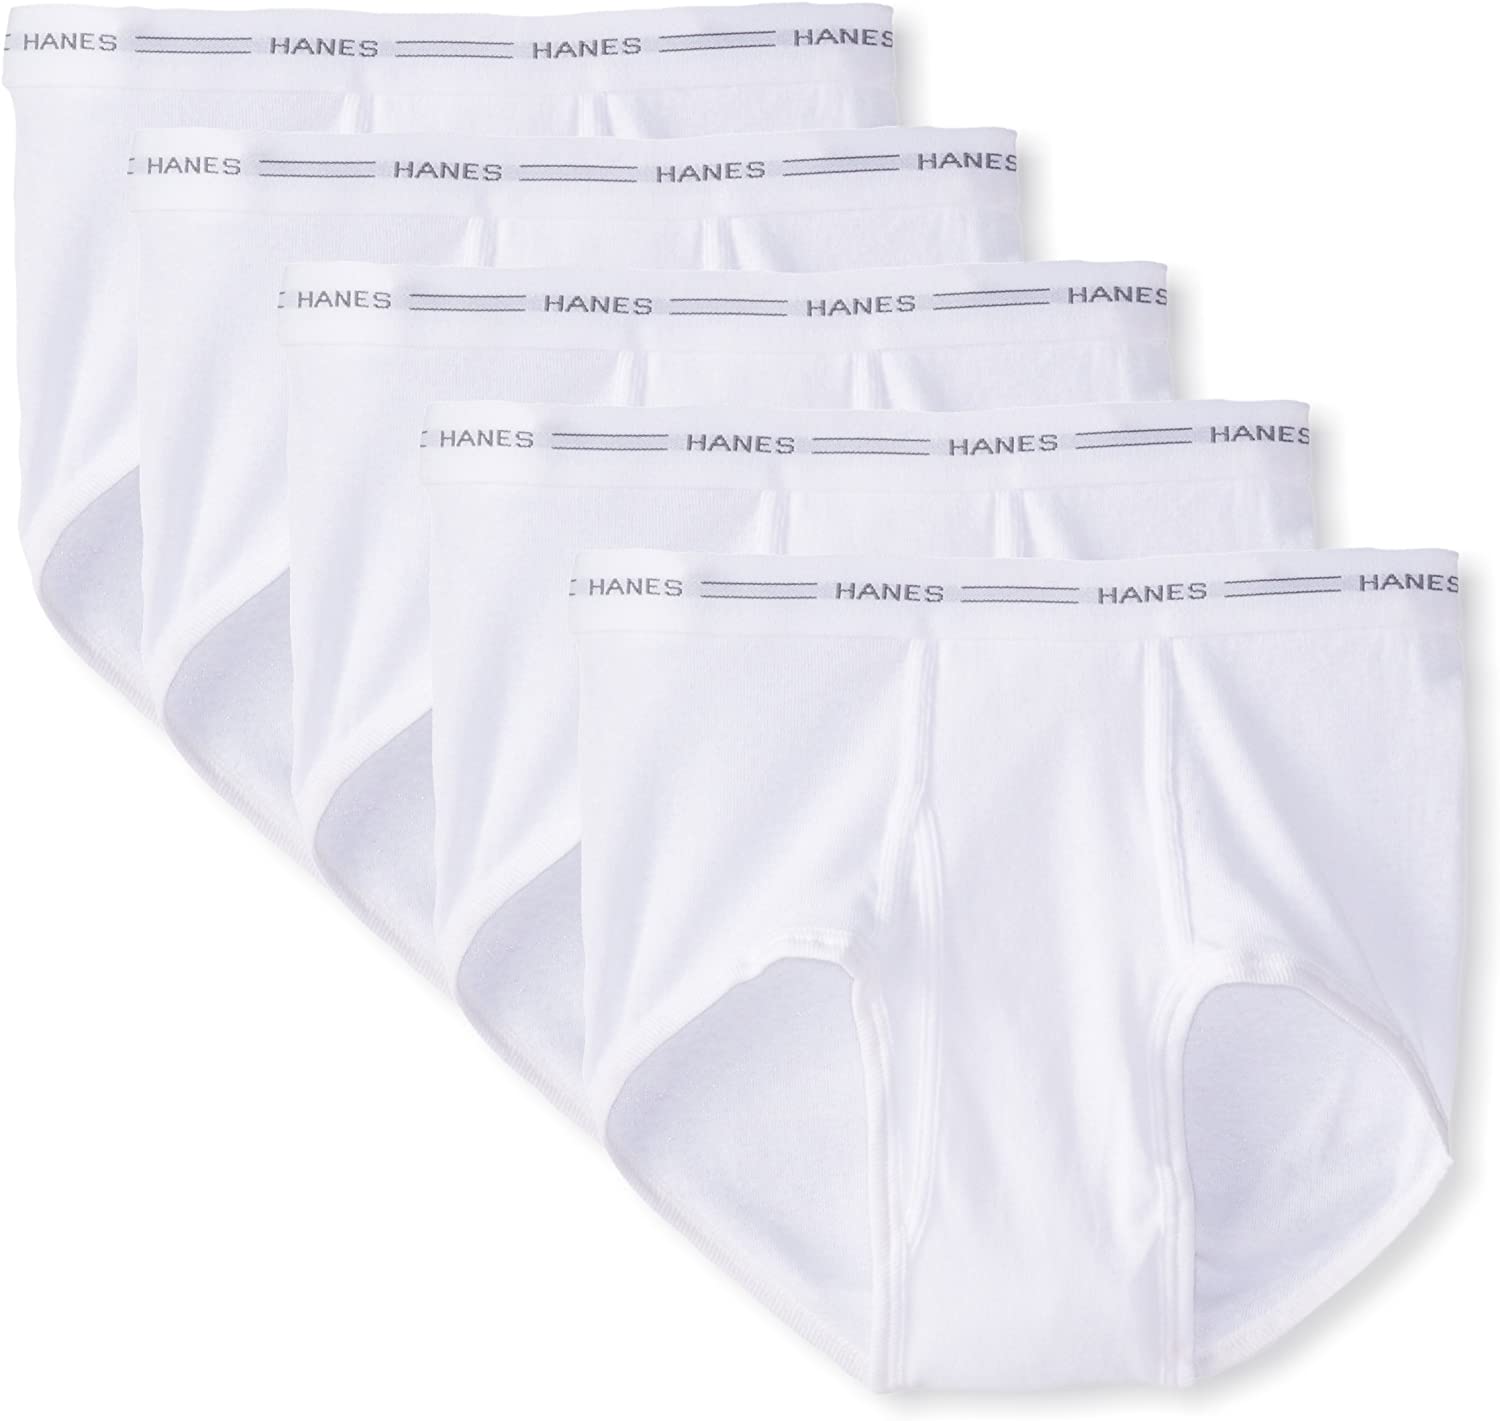 Hanes Men's 5-Pack 100% Preshrunk Cotton Full Rise Briefs | eBay